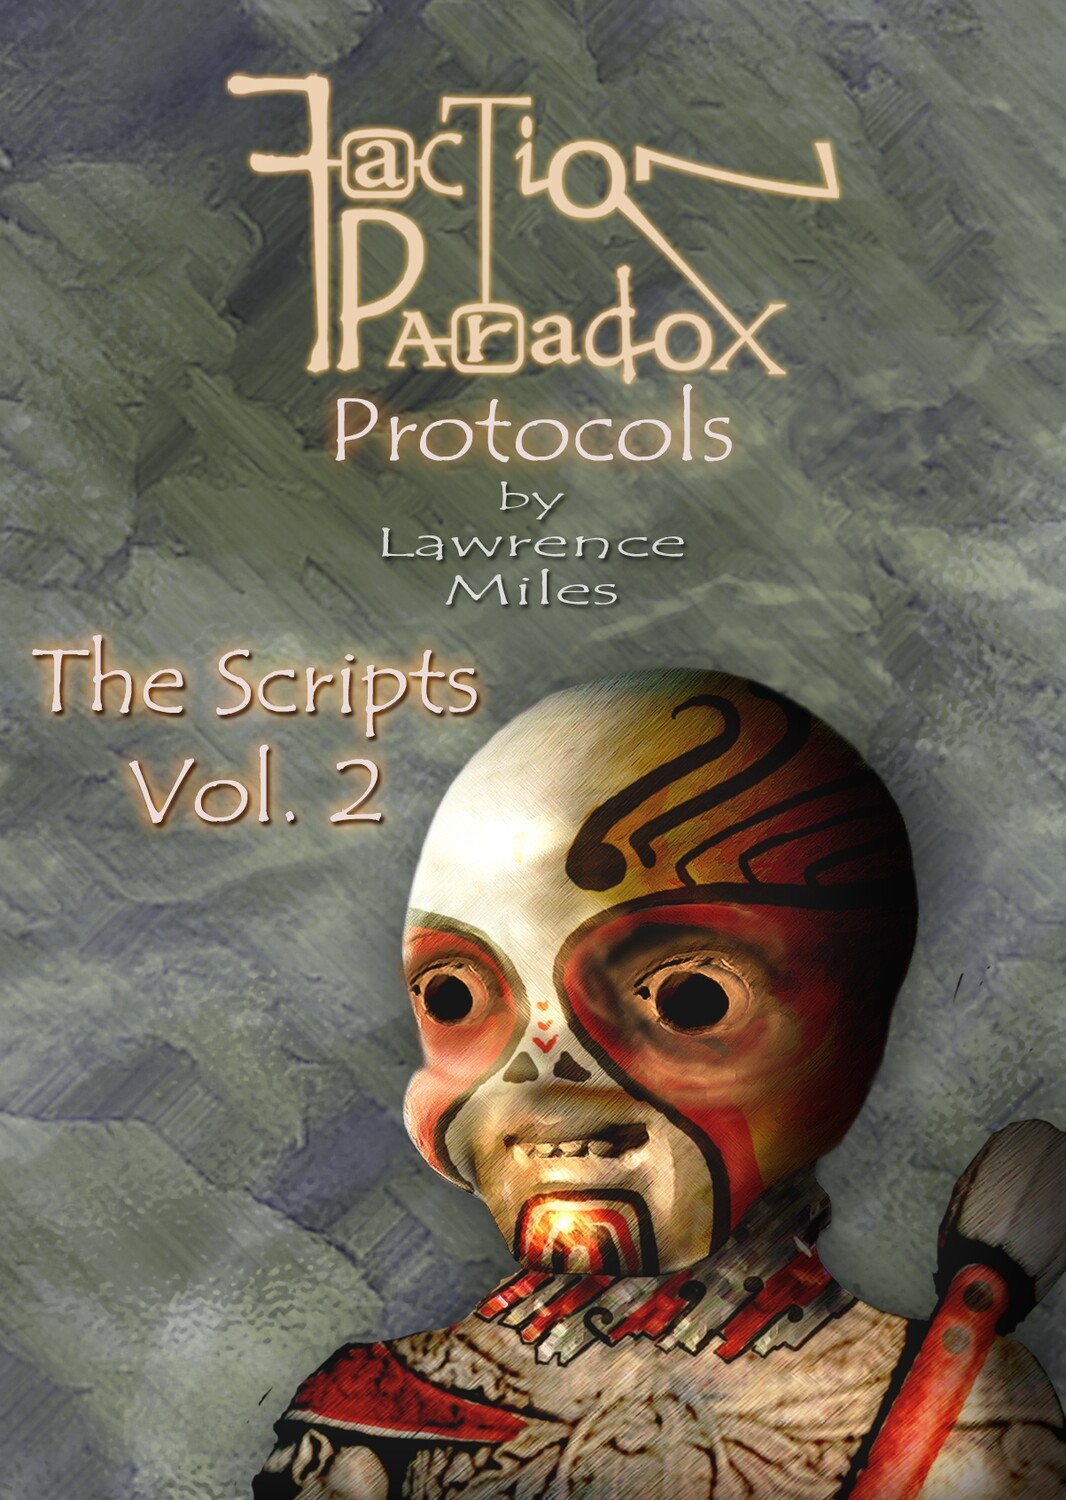 Faction Paradox Protocols: The Scripts Vol. 2 ONLY (eBook DOWNLOAD)